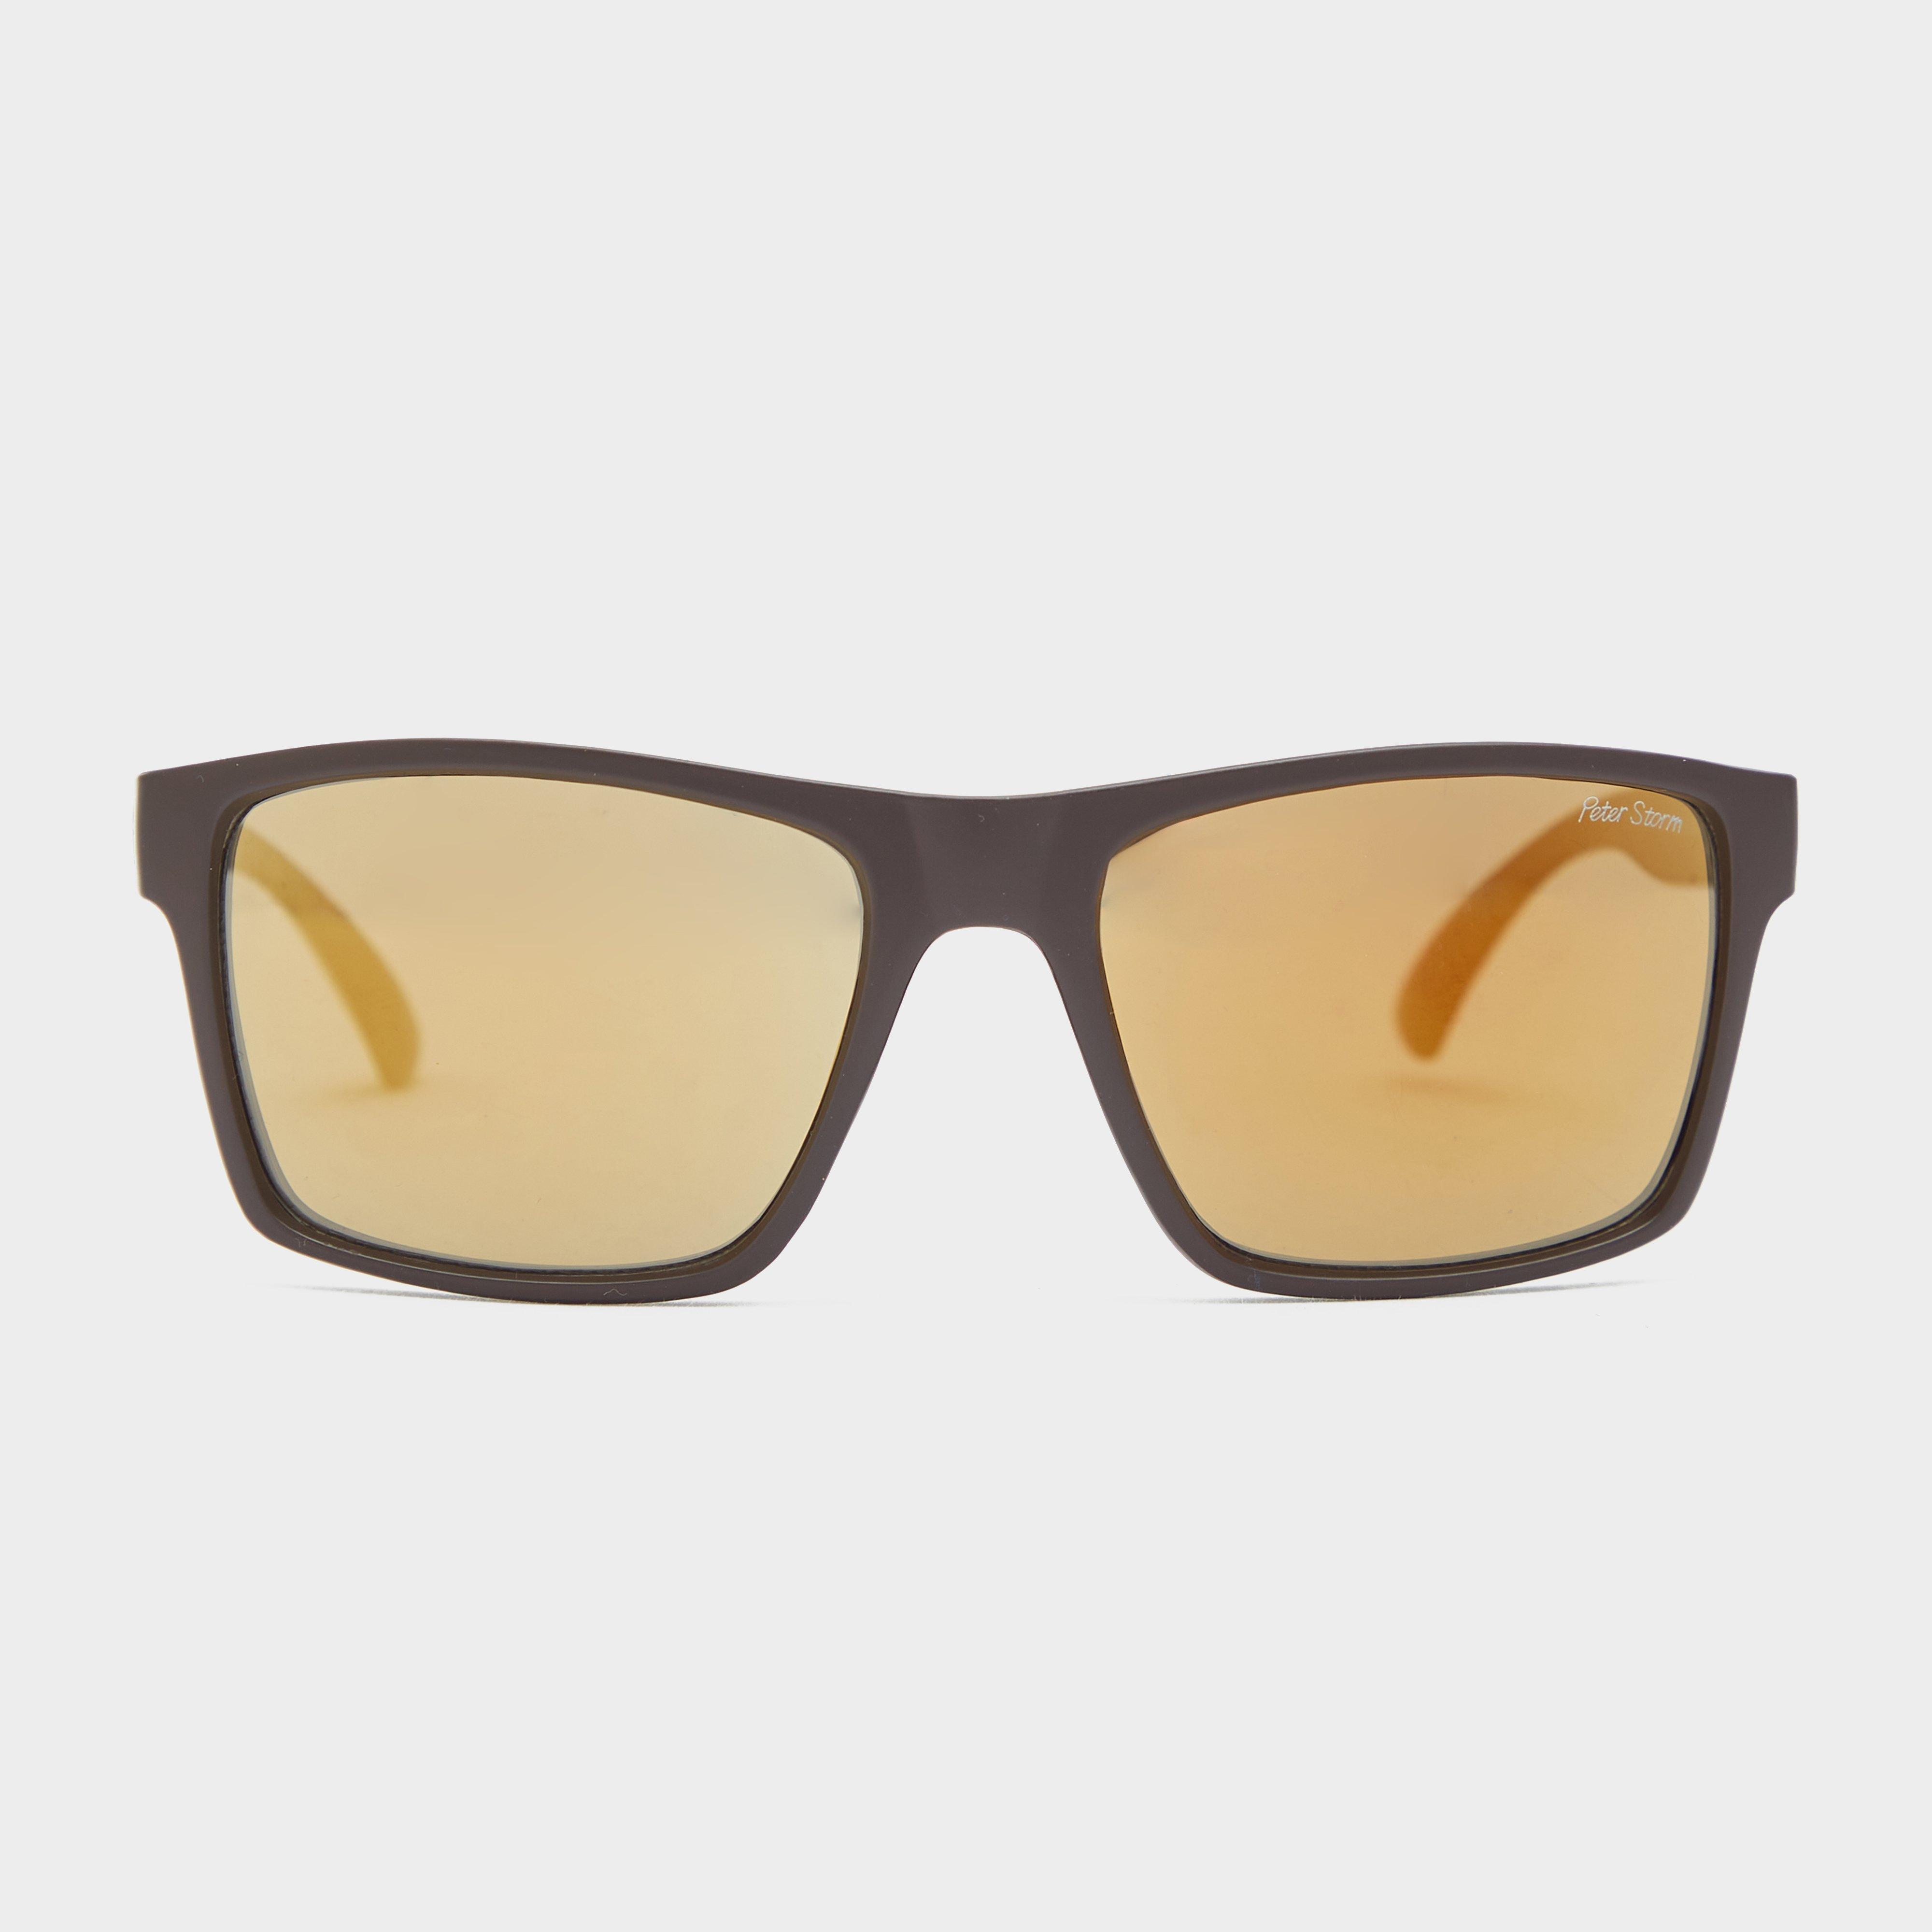 Image of Peter Storm Newquay Sunglasses - Brn/Gld, BRN/GLD